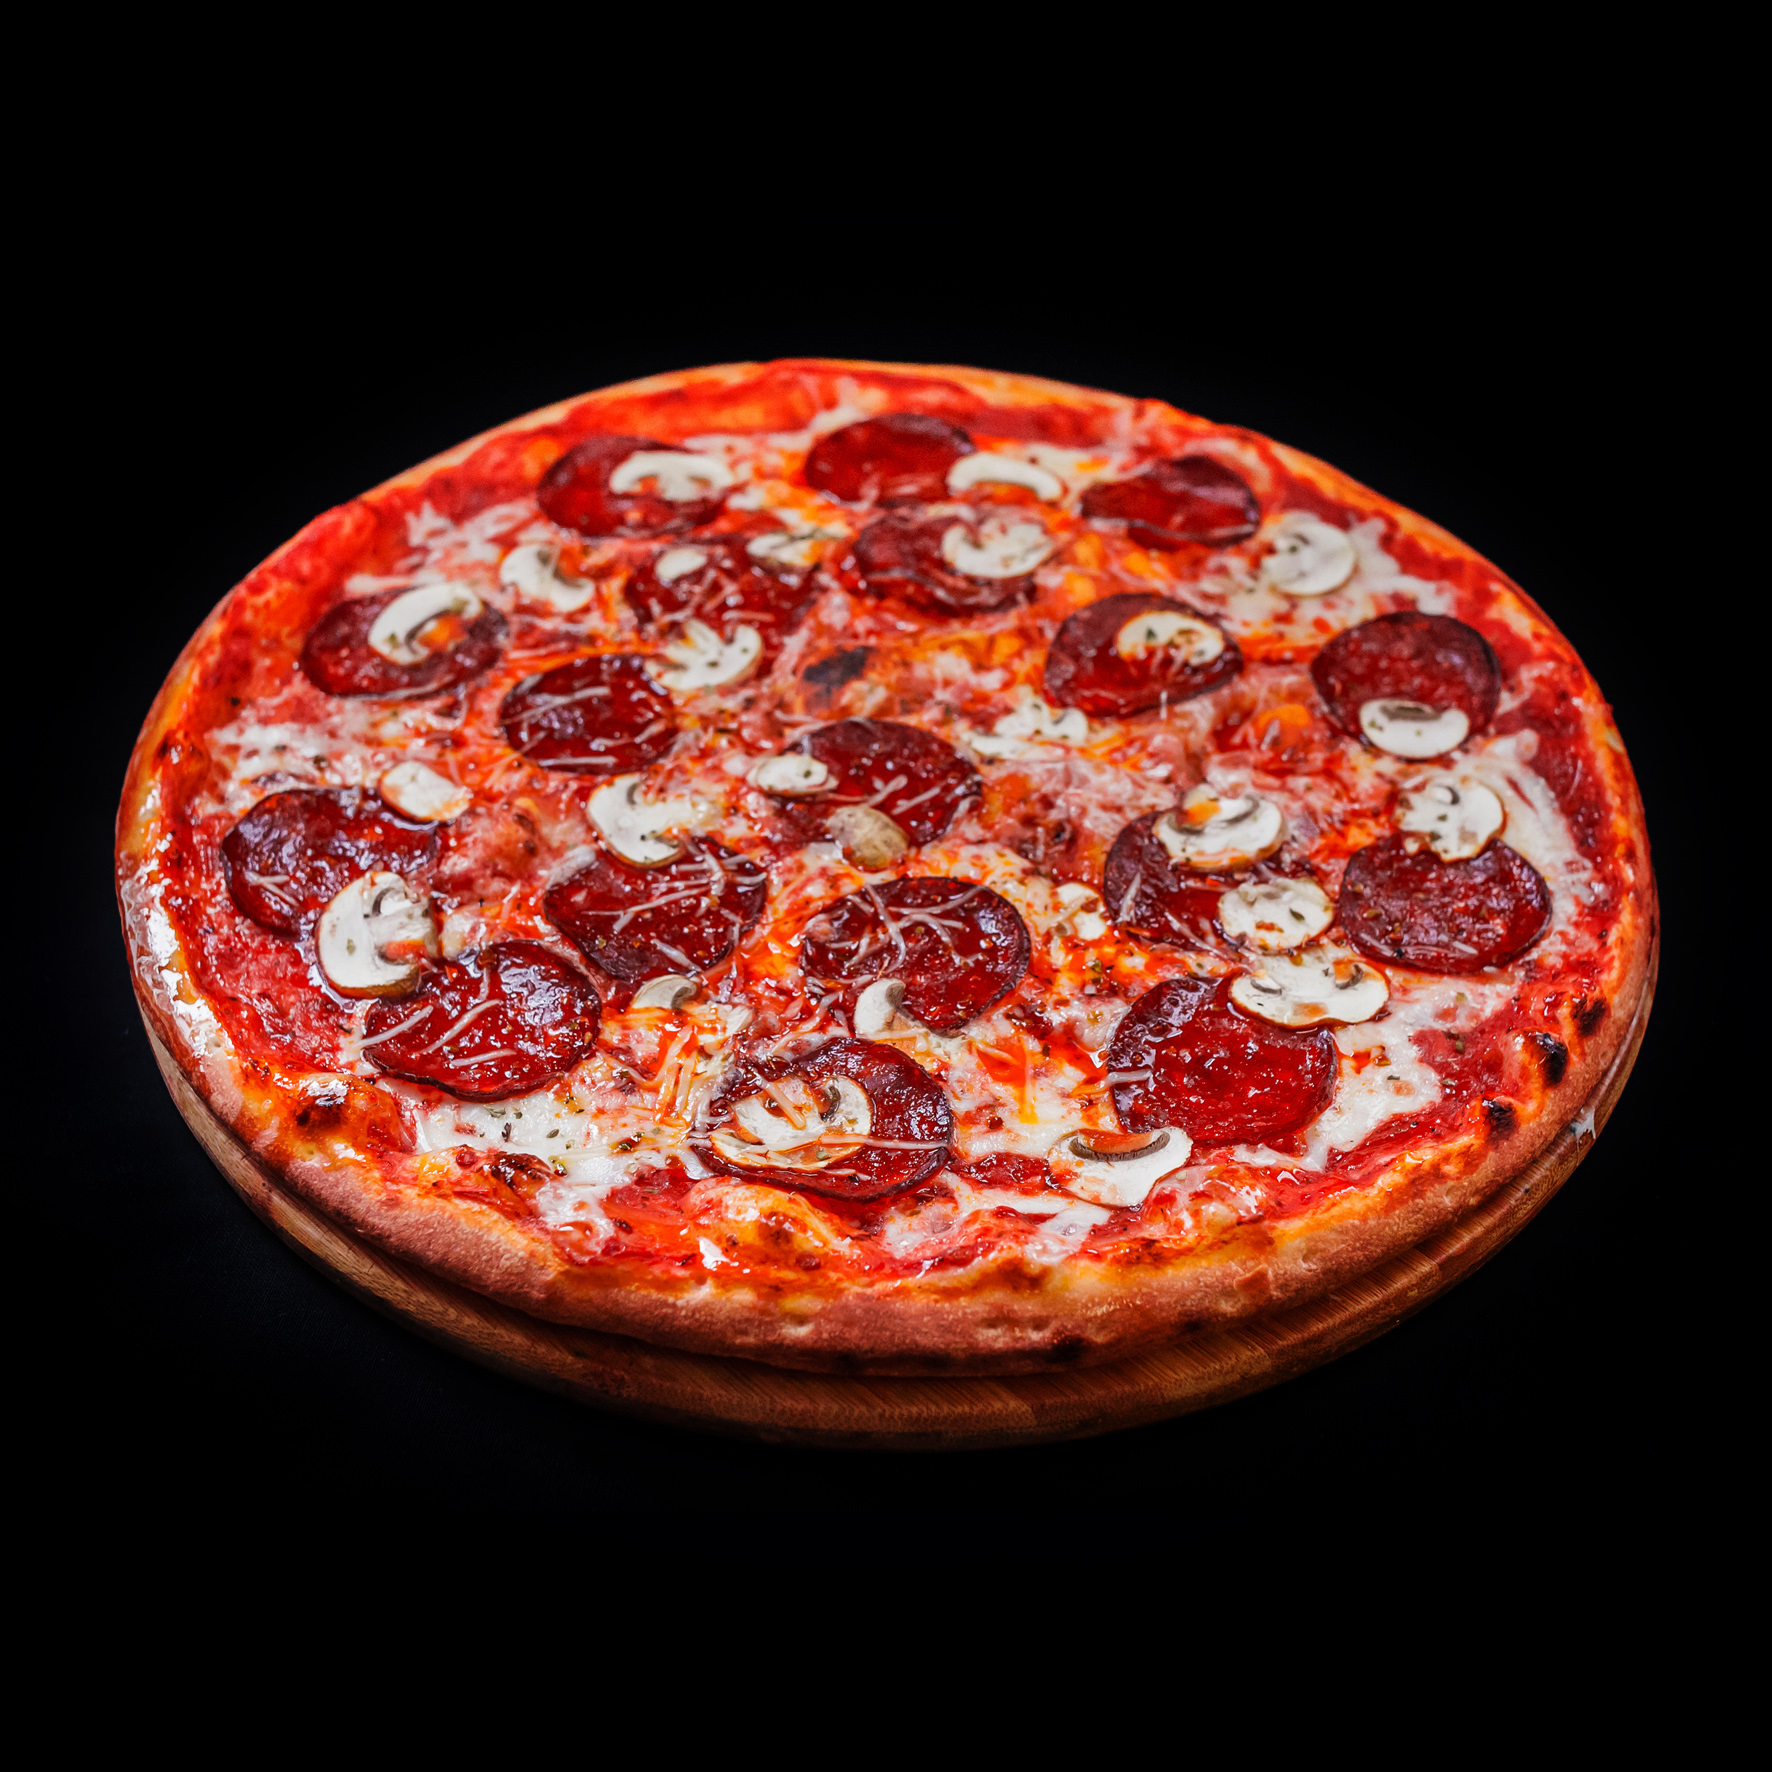 сколько стоит 1 пицца пепперони фото 76